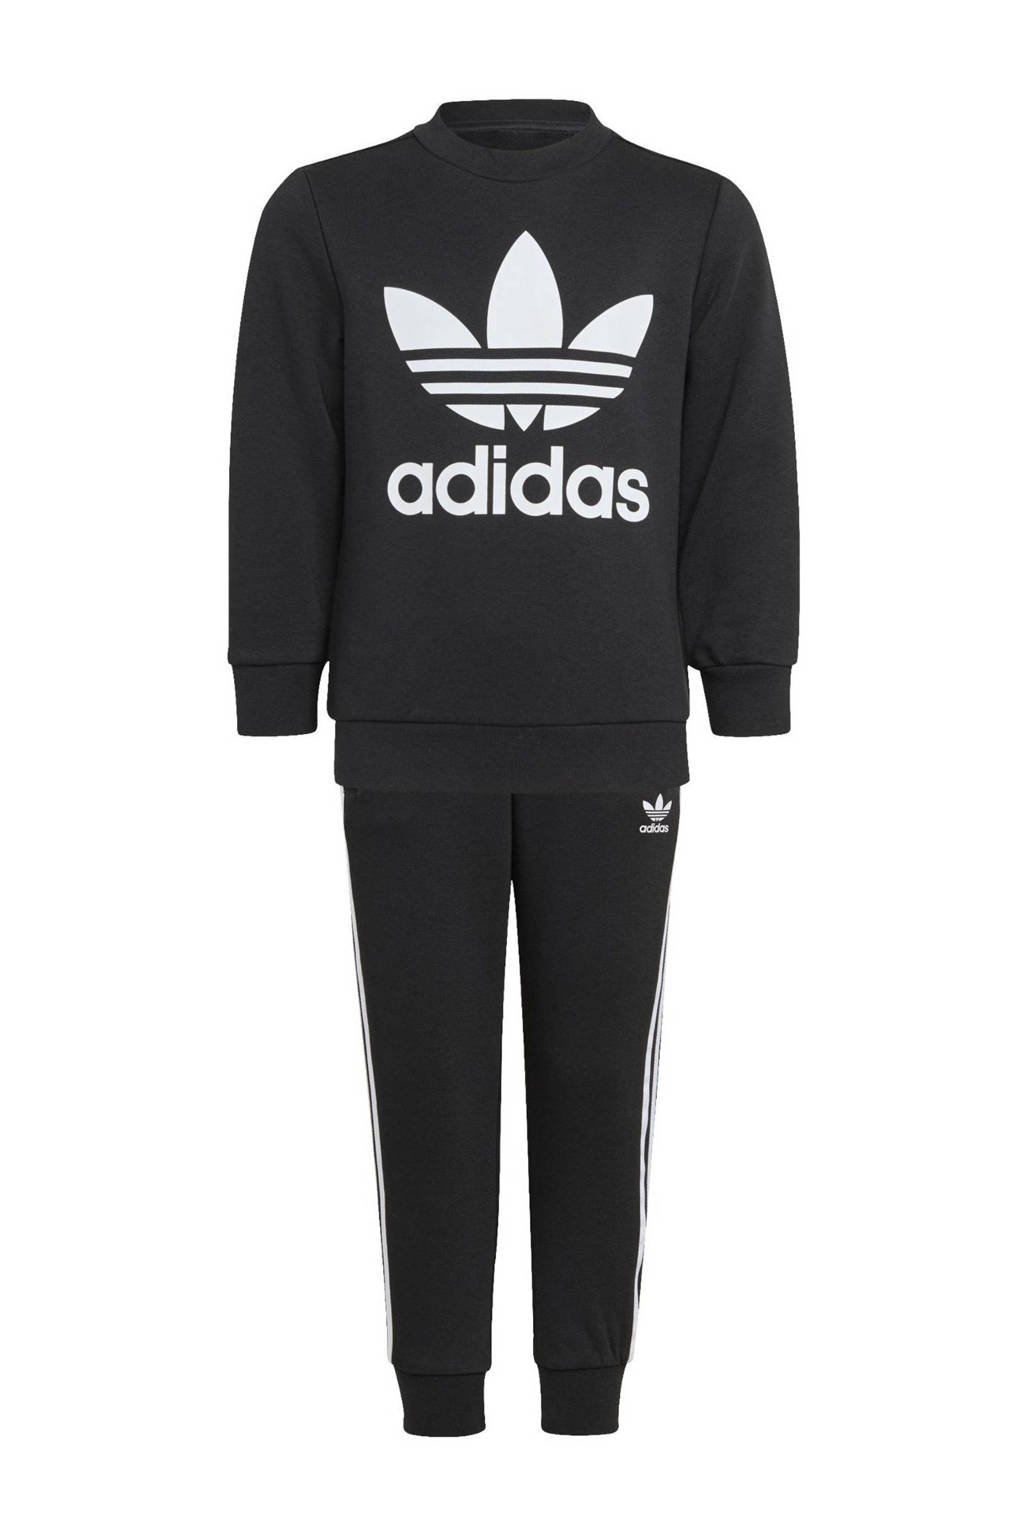 Rouwen puur Stam adidas Originals Adicolor joggingpak zwart/wit | wehkamp